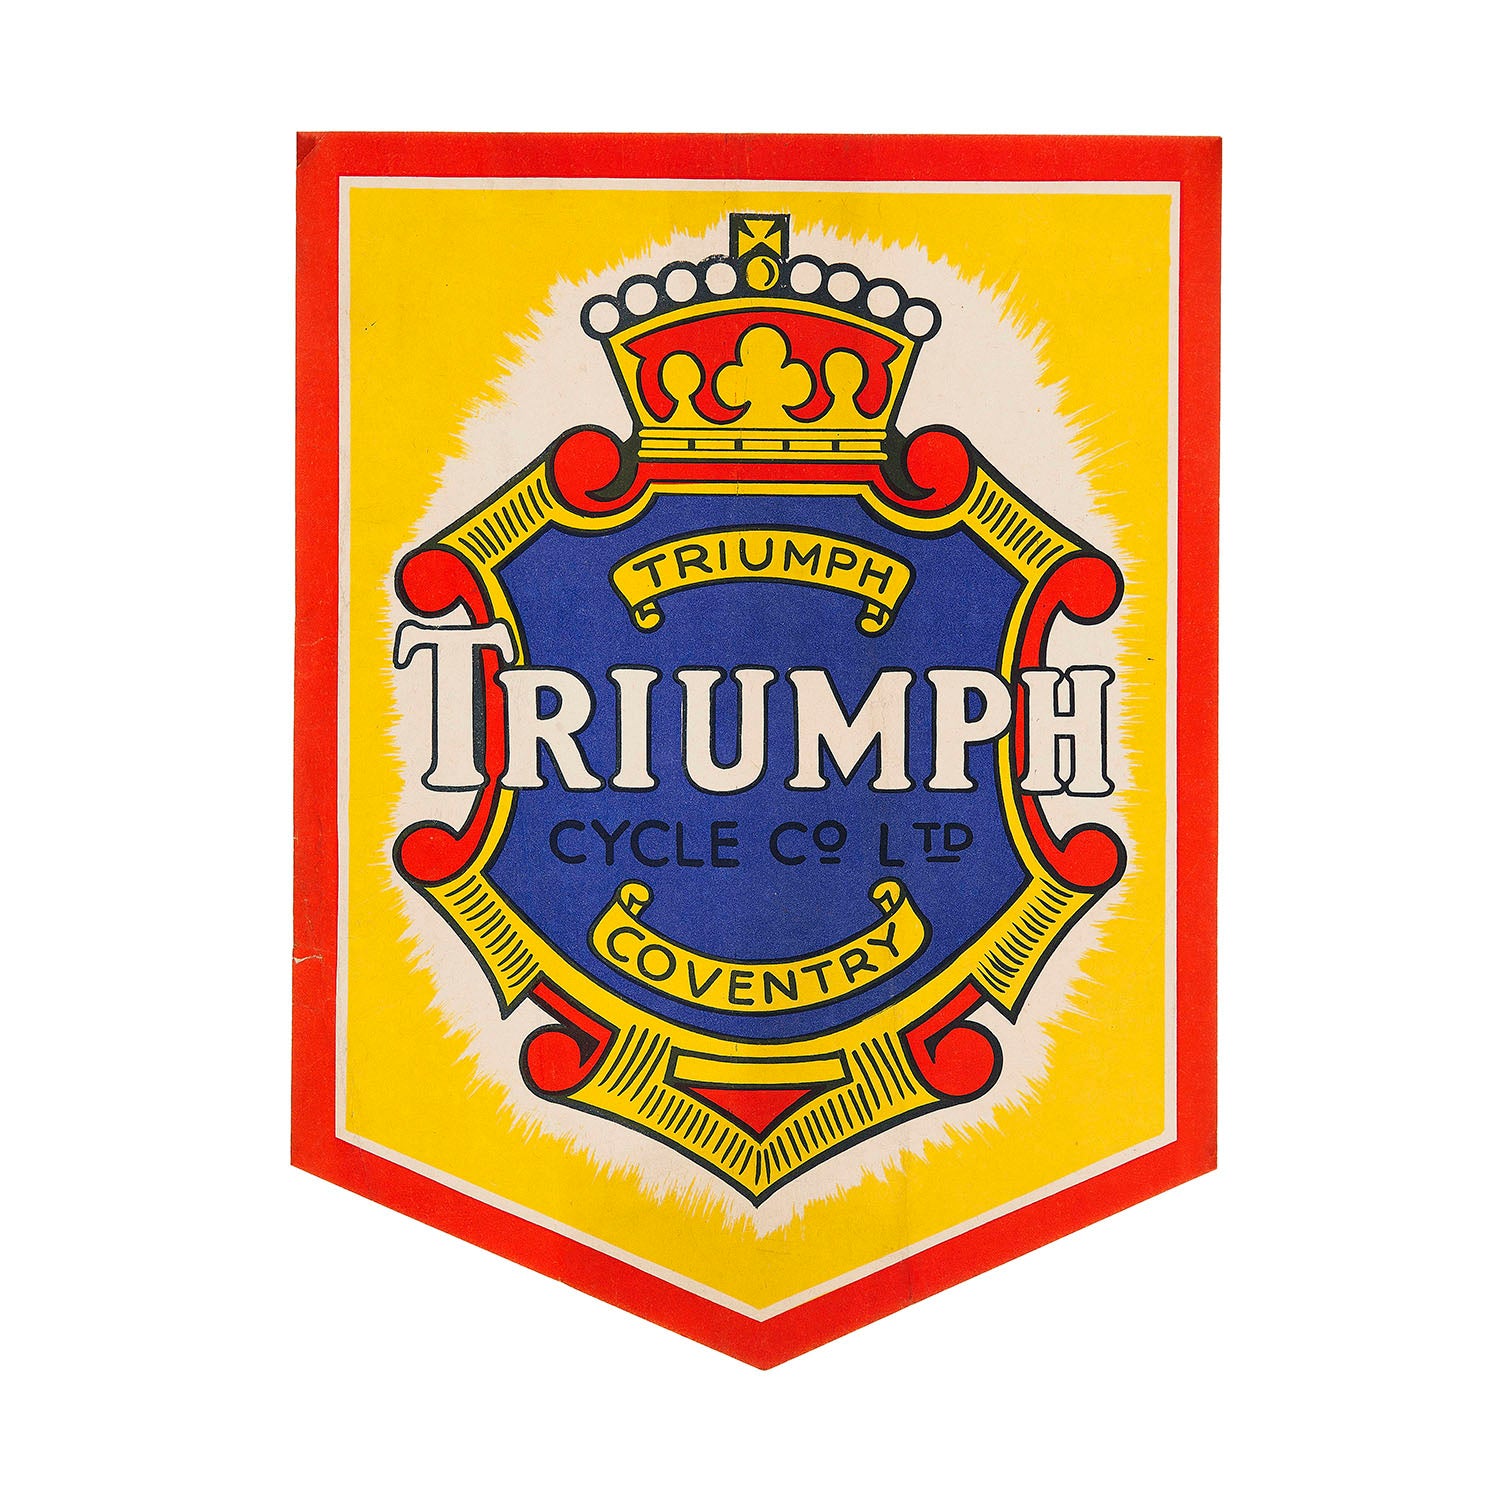 Triumph Cycle Co Ltd Coventry